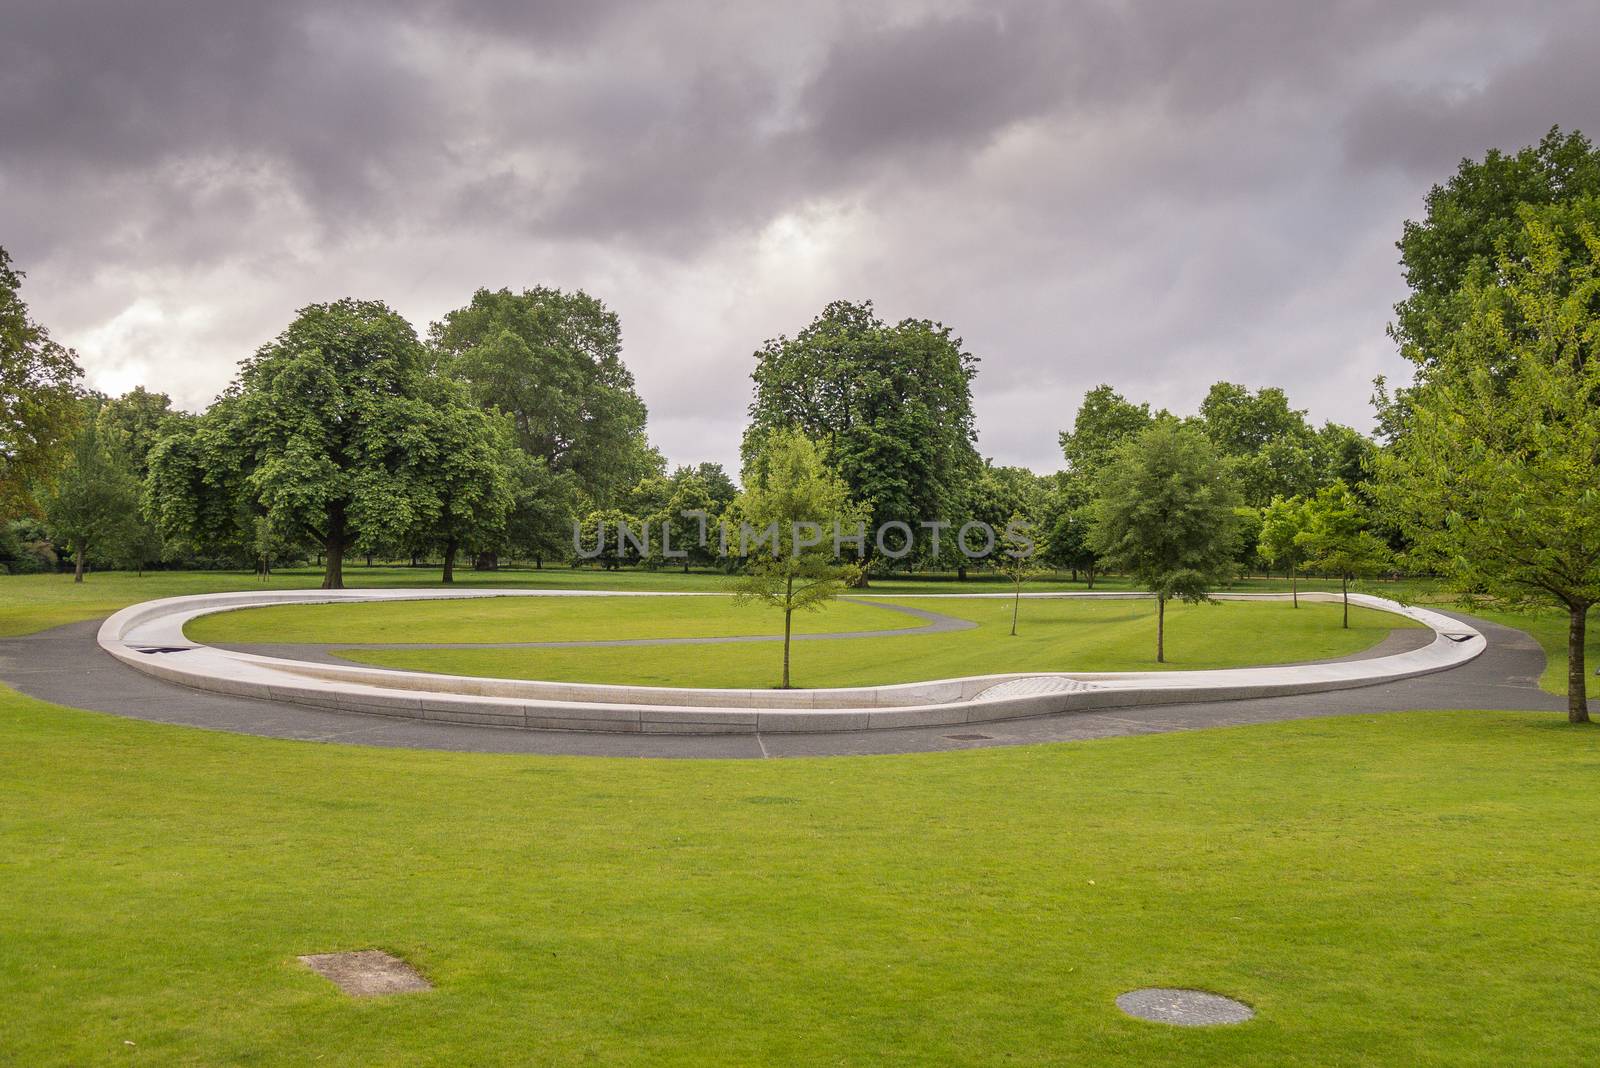 Princess Diana Memorial in Hyde Park London by chrisukphoto